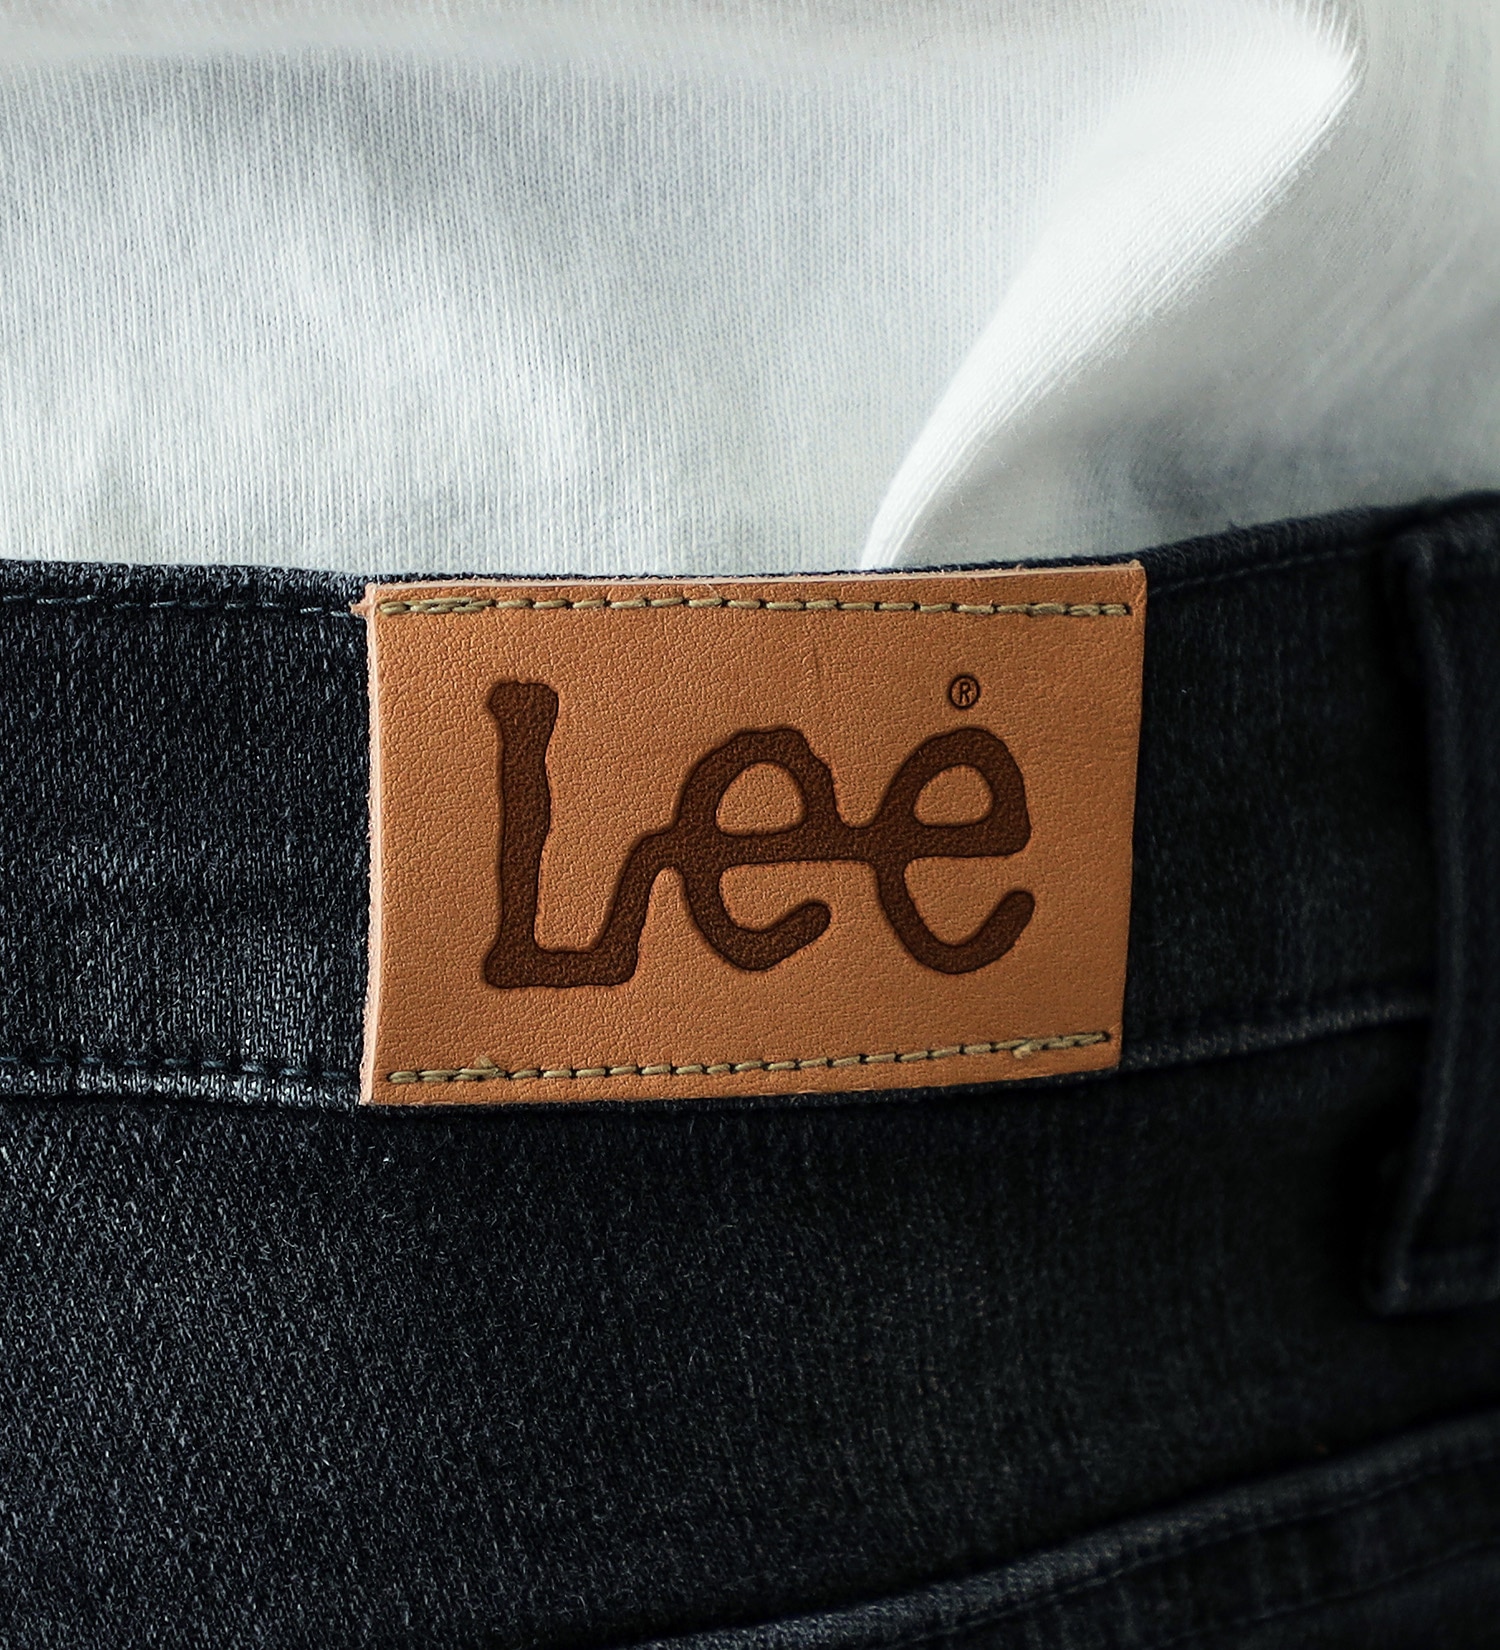 Lee(リー)の【GW SALE】【超快適ストレッチ】キャロット スキニーパンツ|パンツ/デニムパンツ/メンズ|ブラックデニム2